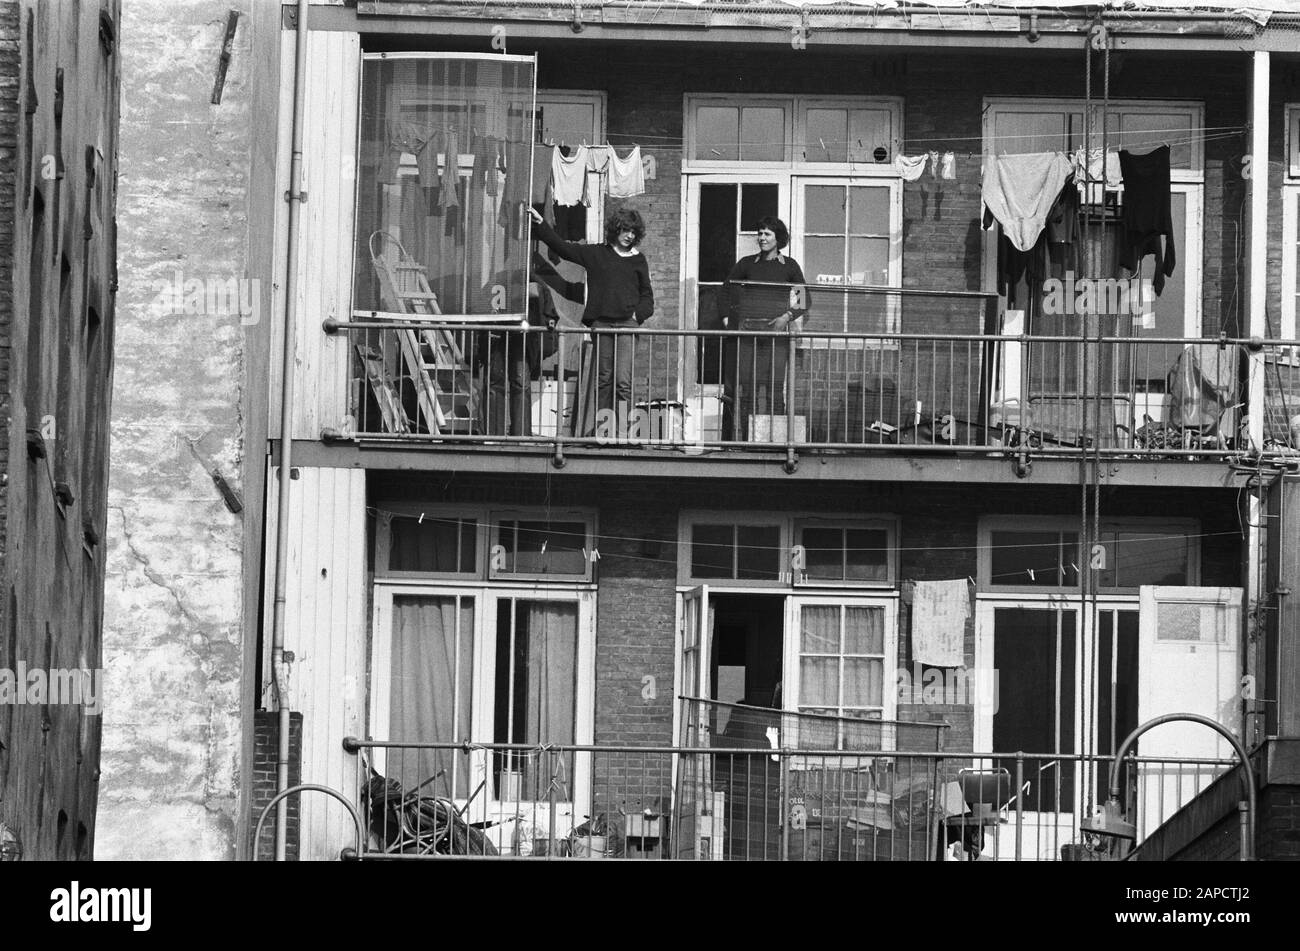 Action groups and residents Lastageweg (Nieuwmarktbuurt) prepare for demolition; barricading of windows Date: April 7, 1975 Keywords: ACTION GROUP, residents, demolition Stock Photo